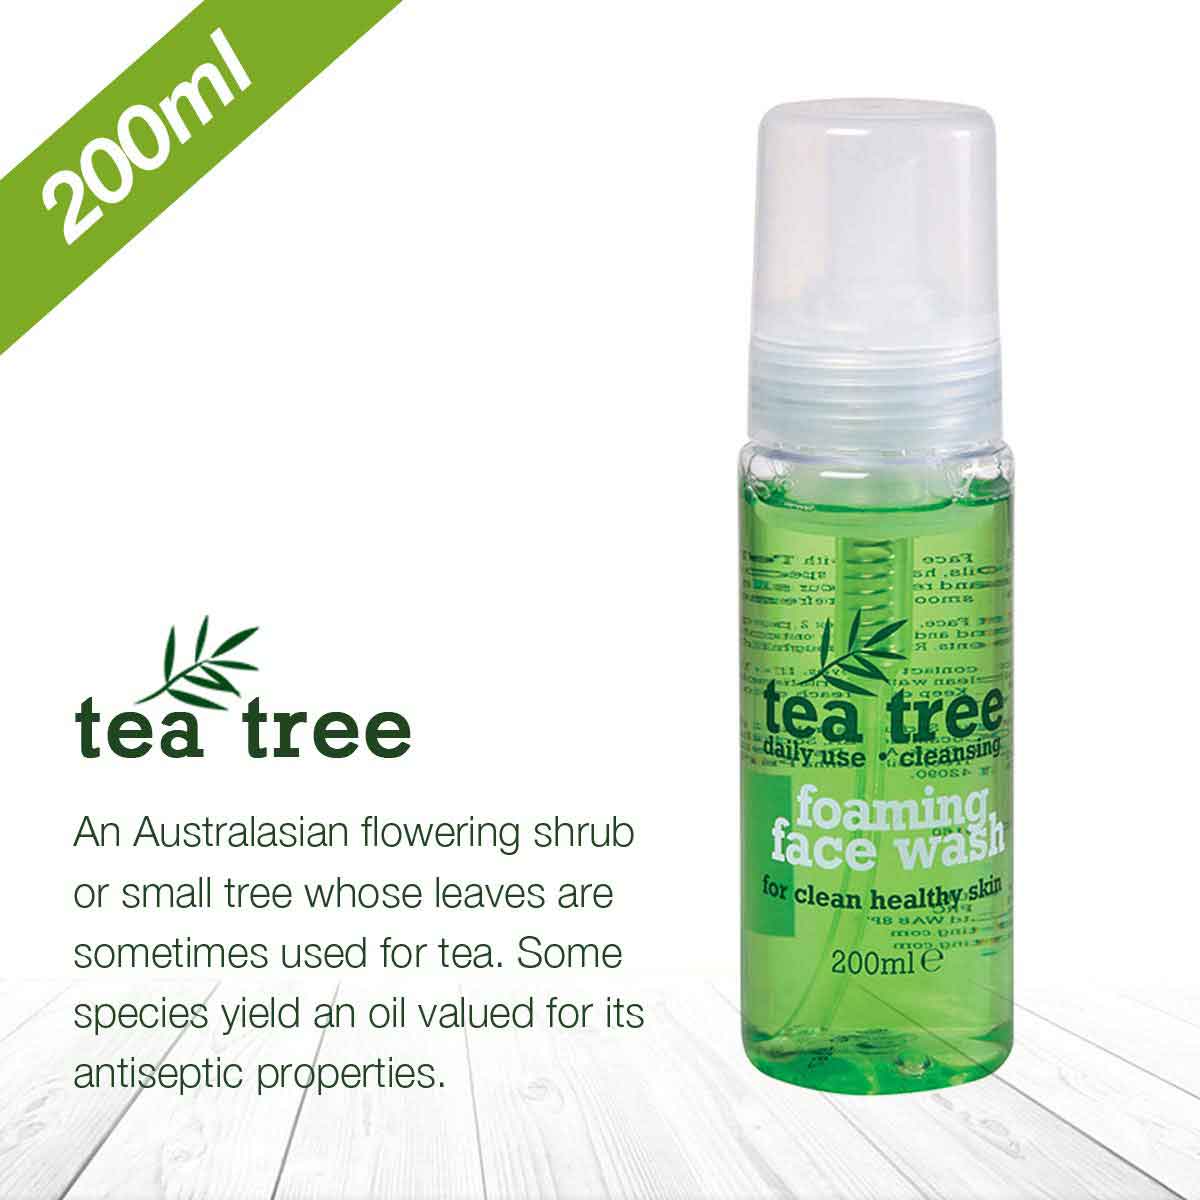 Xpel Tea Tree Foaming Face Wash (200ml)